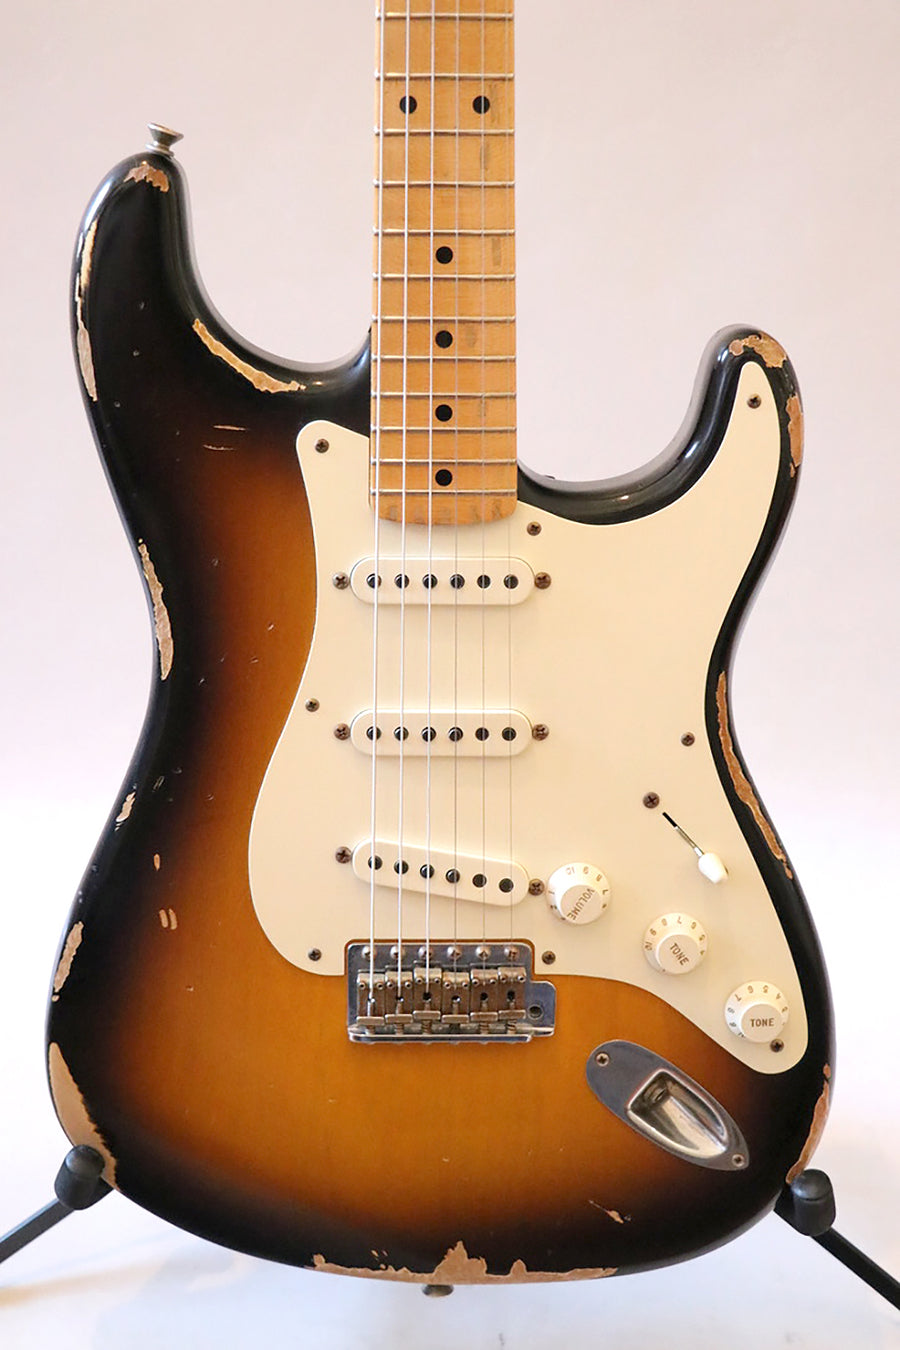 Fender Stratocaster Custom Shop Master Built 1957 Relic by Dennis Galuszka - 2008